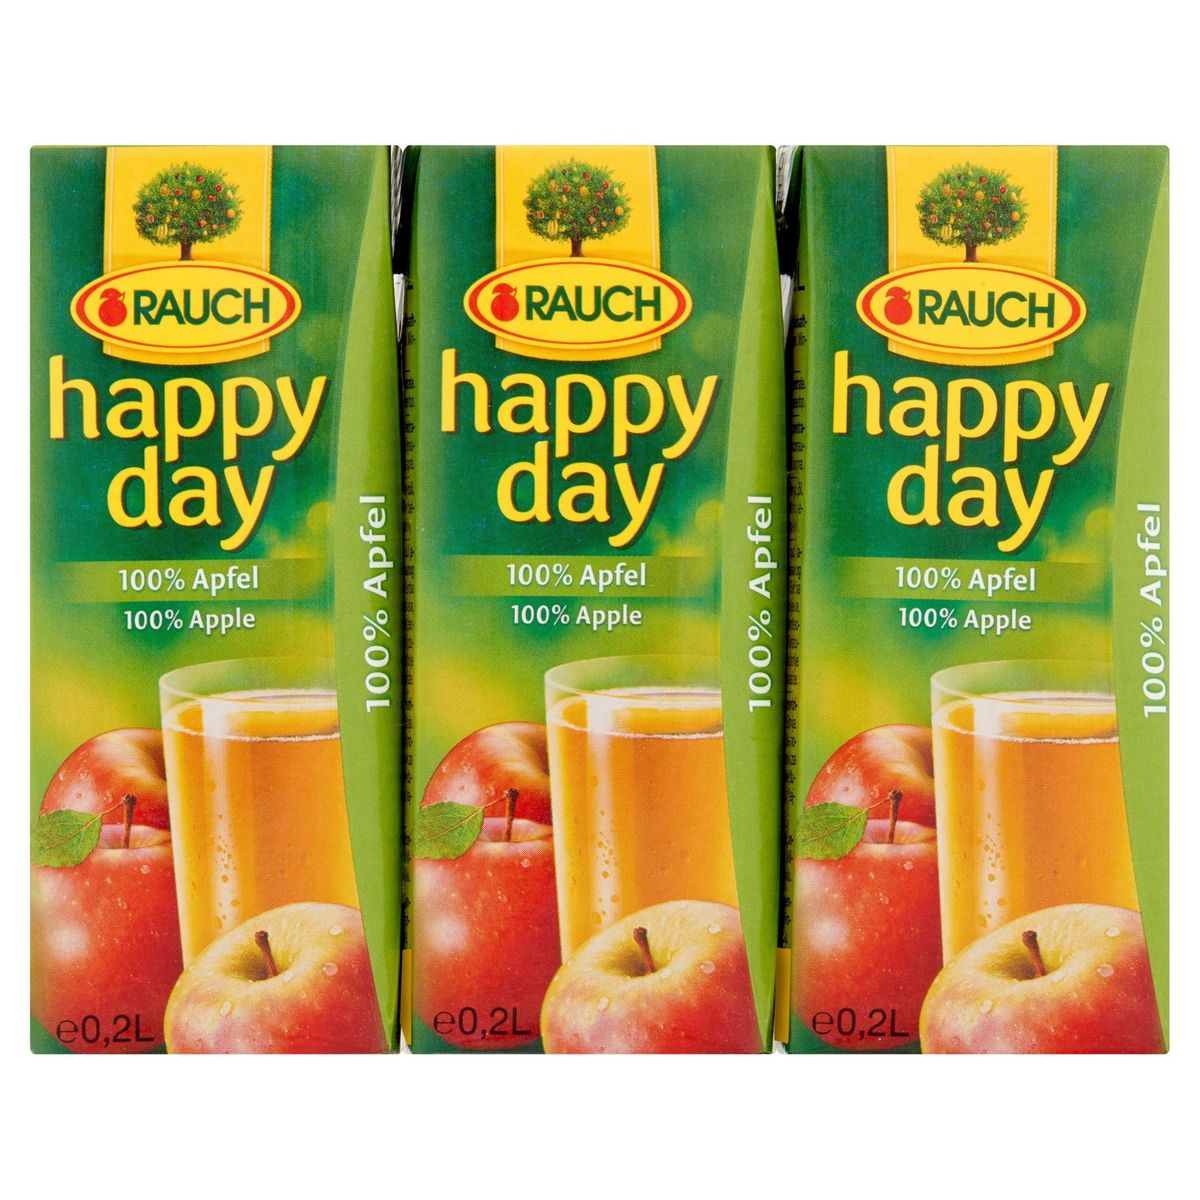 Rauch happy day 100% Apple 3 x 0.2 L